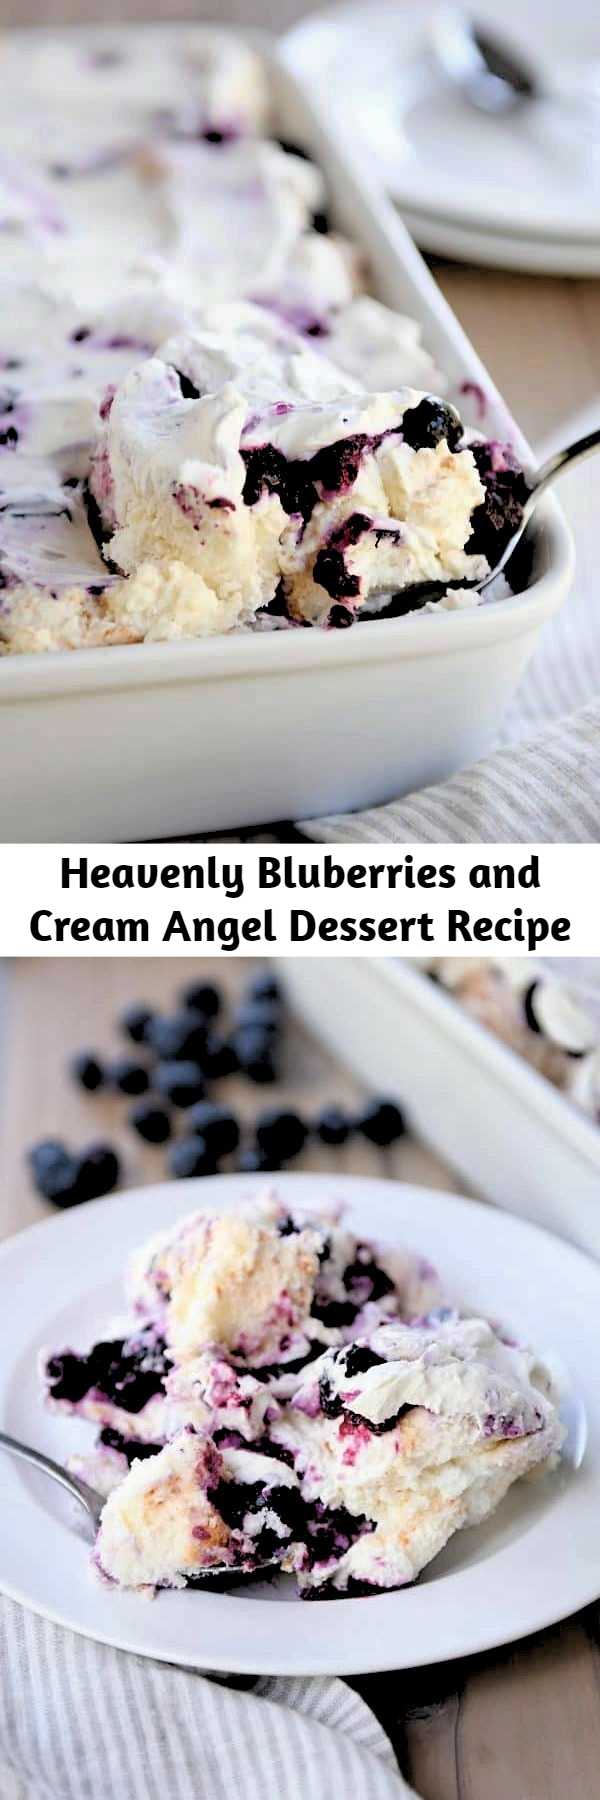 Heavenly Bluberries and Cream Angel Dessert Recipe